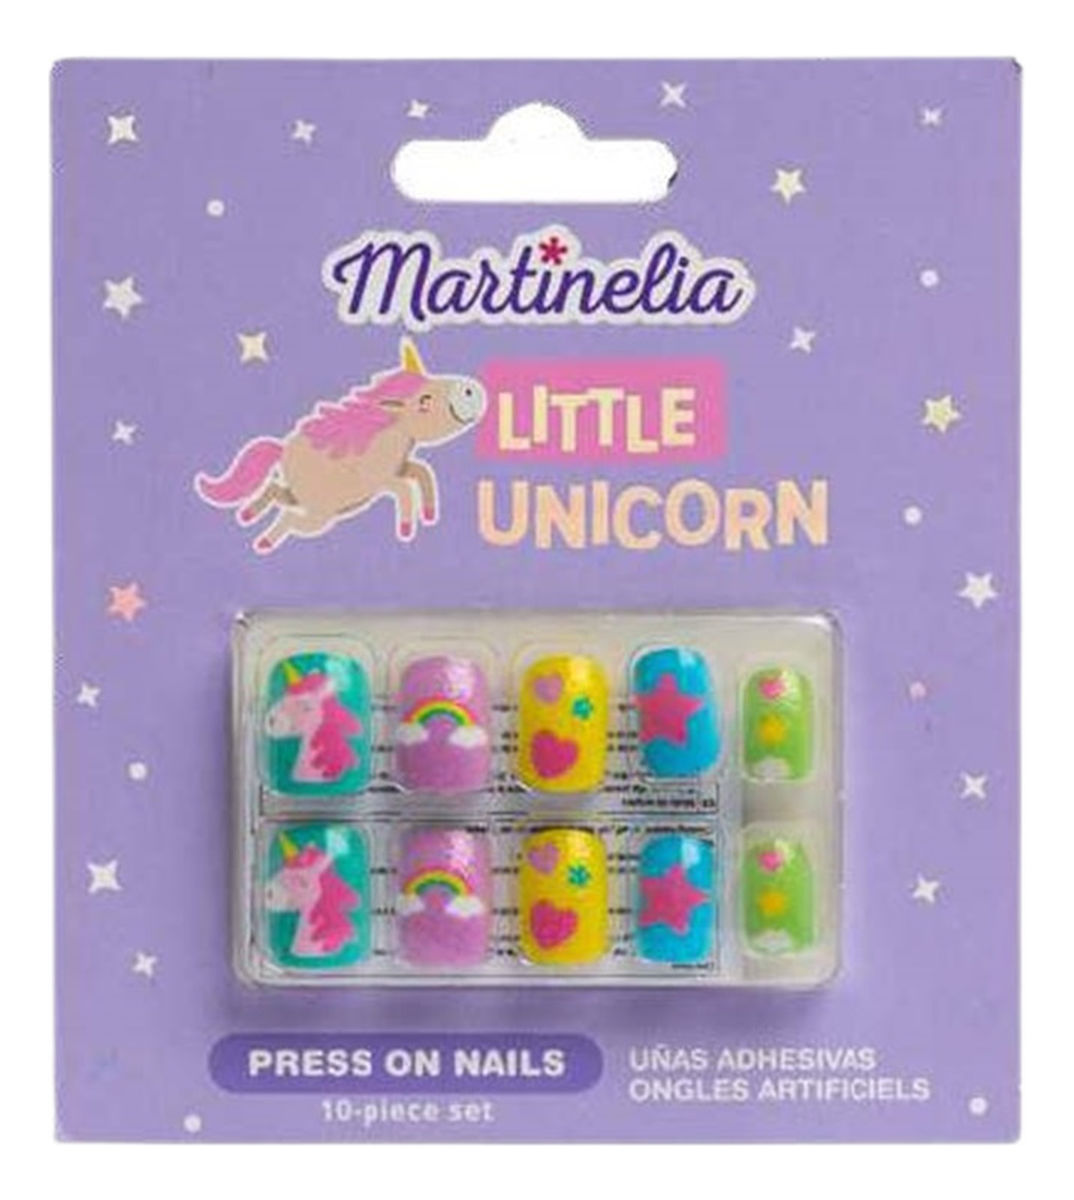 Little unicorn press on nails sztuczne paznokcie 10szt.